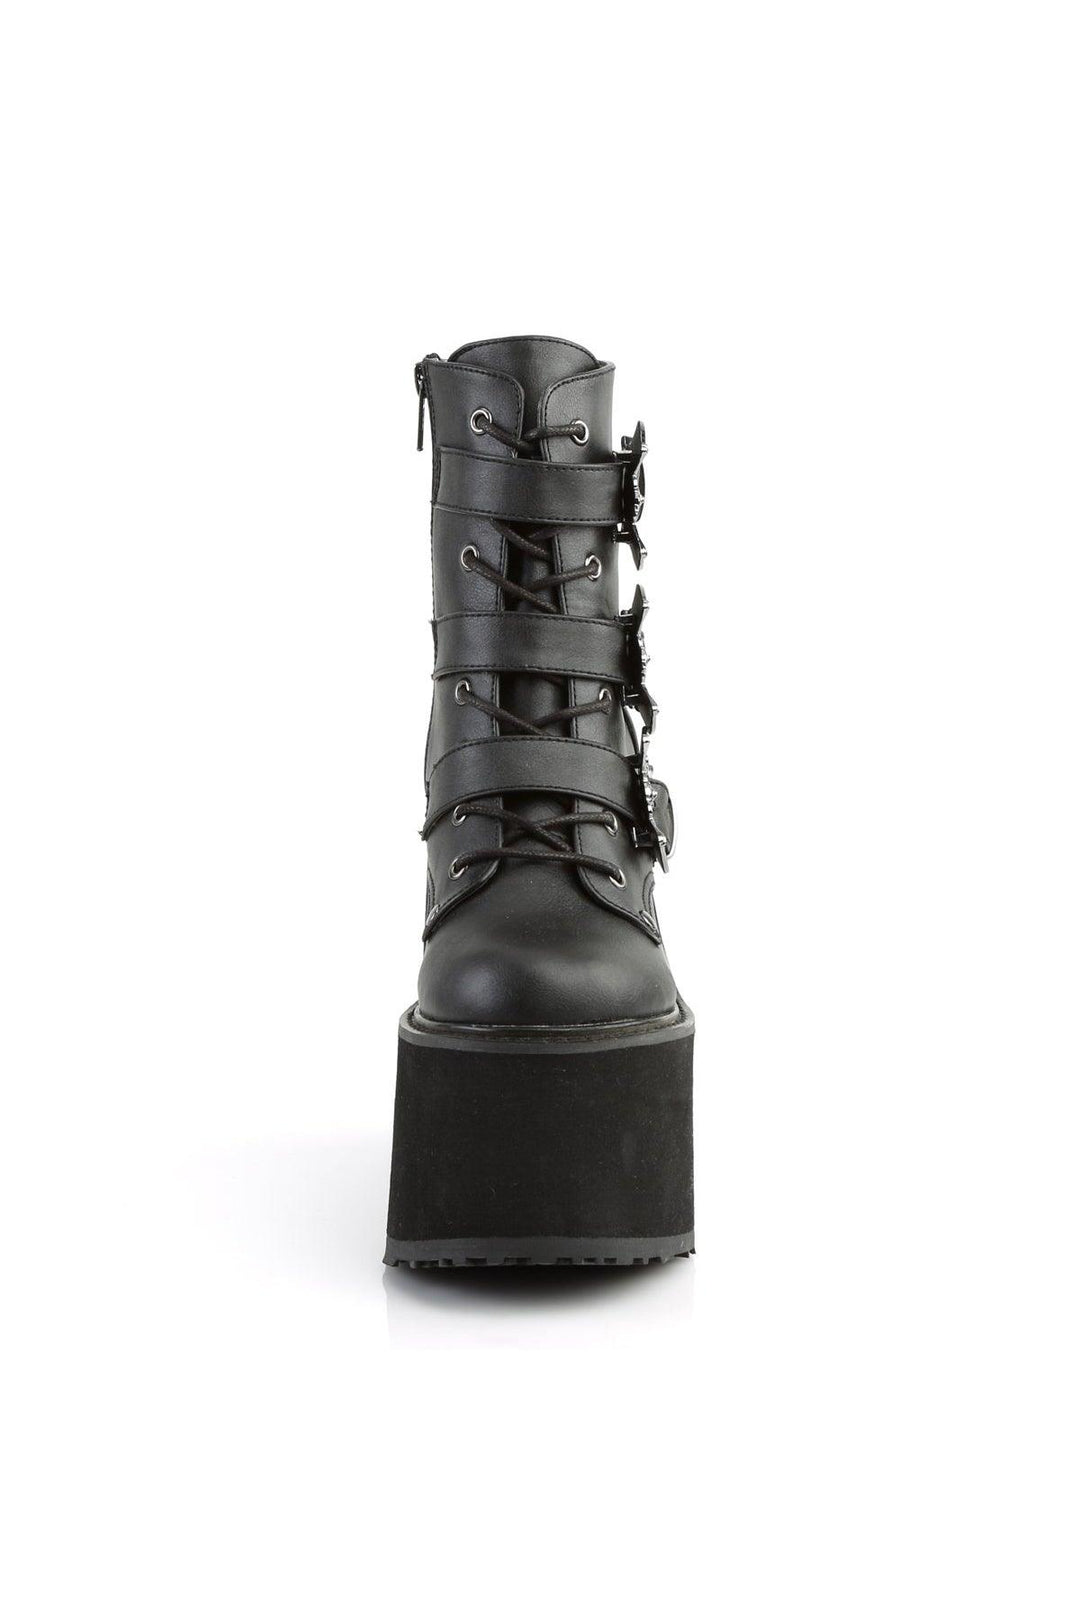 Demonia Cauldron of Bats SWING-103 Boots [Black Vegan Leather] - VampireFreaks